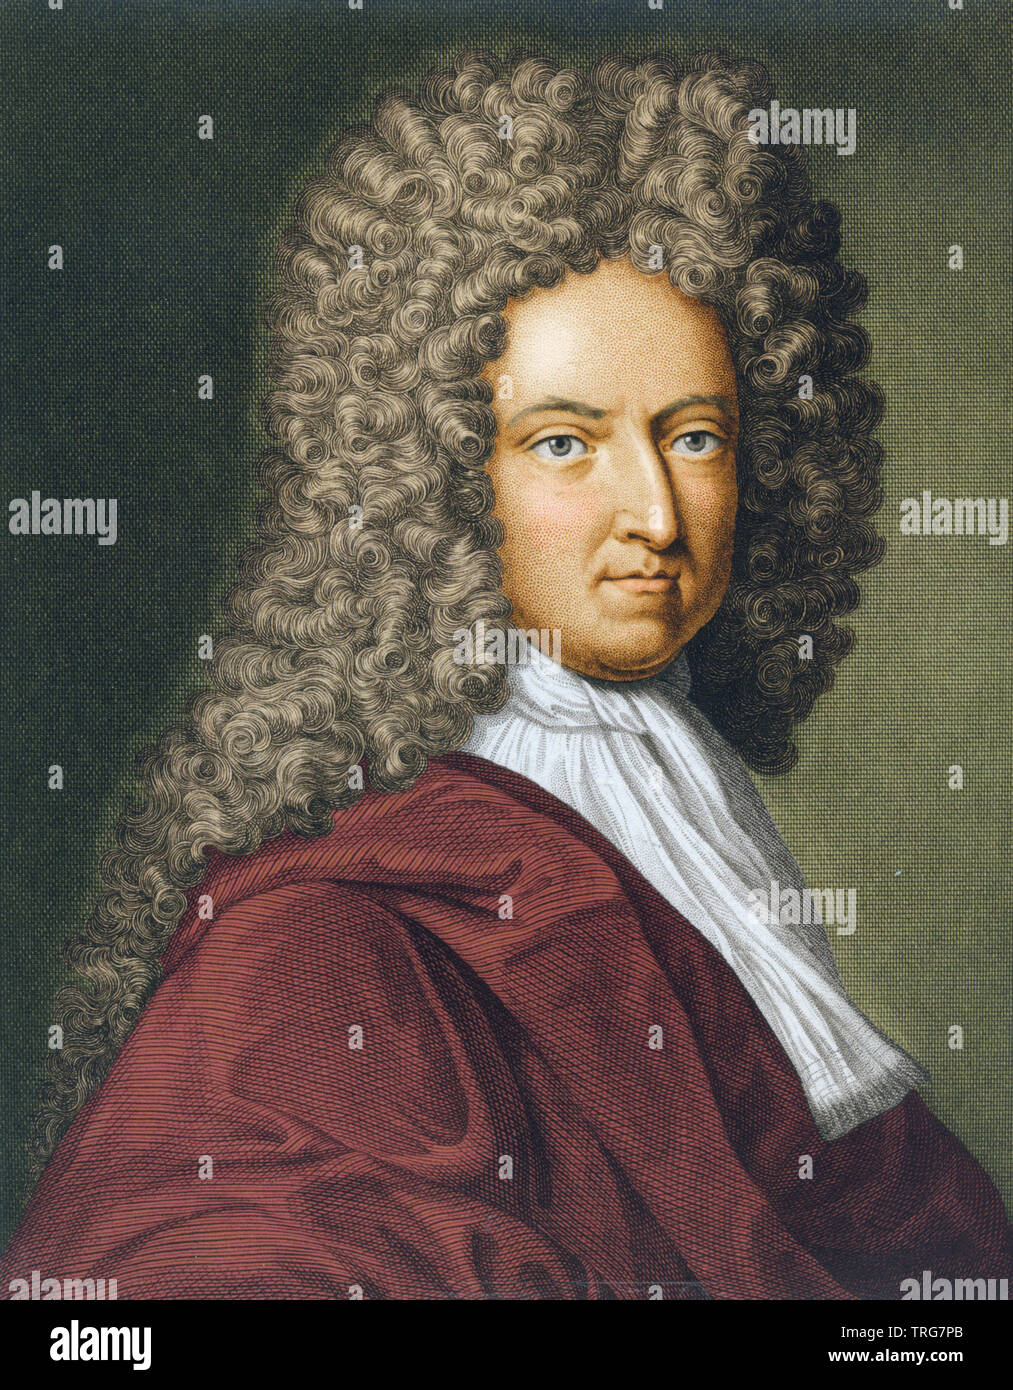 DANIEL DEFOE (c 1660-1731) novelista inglés y trader Foto de stock